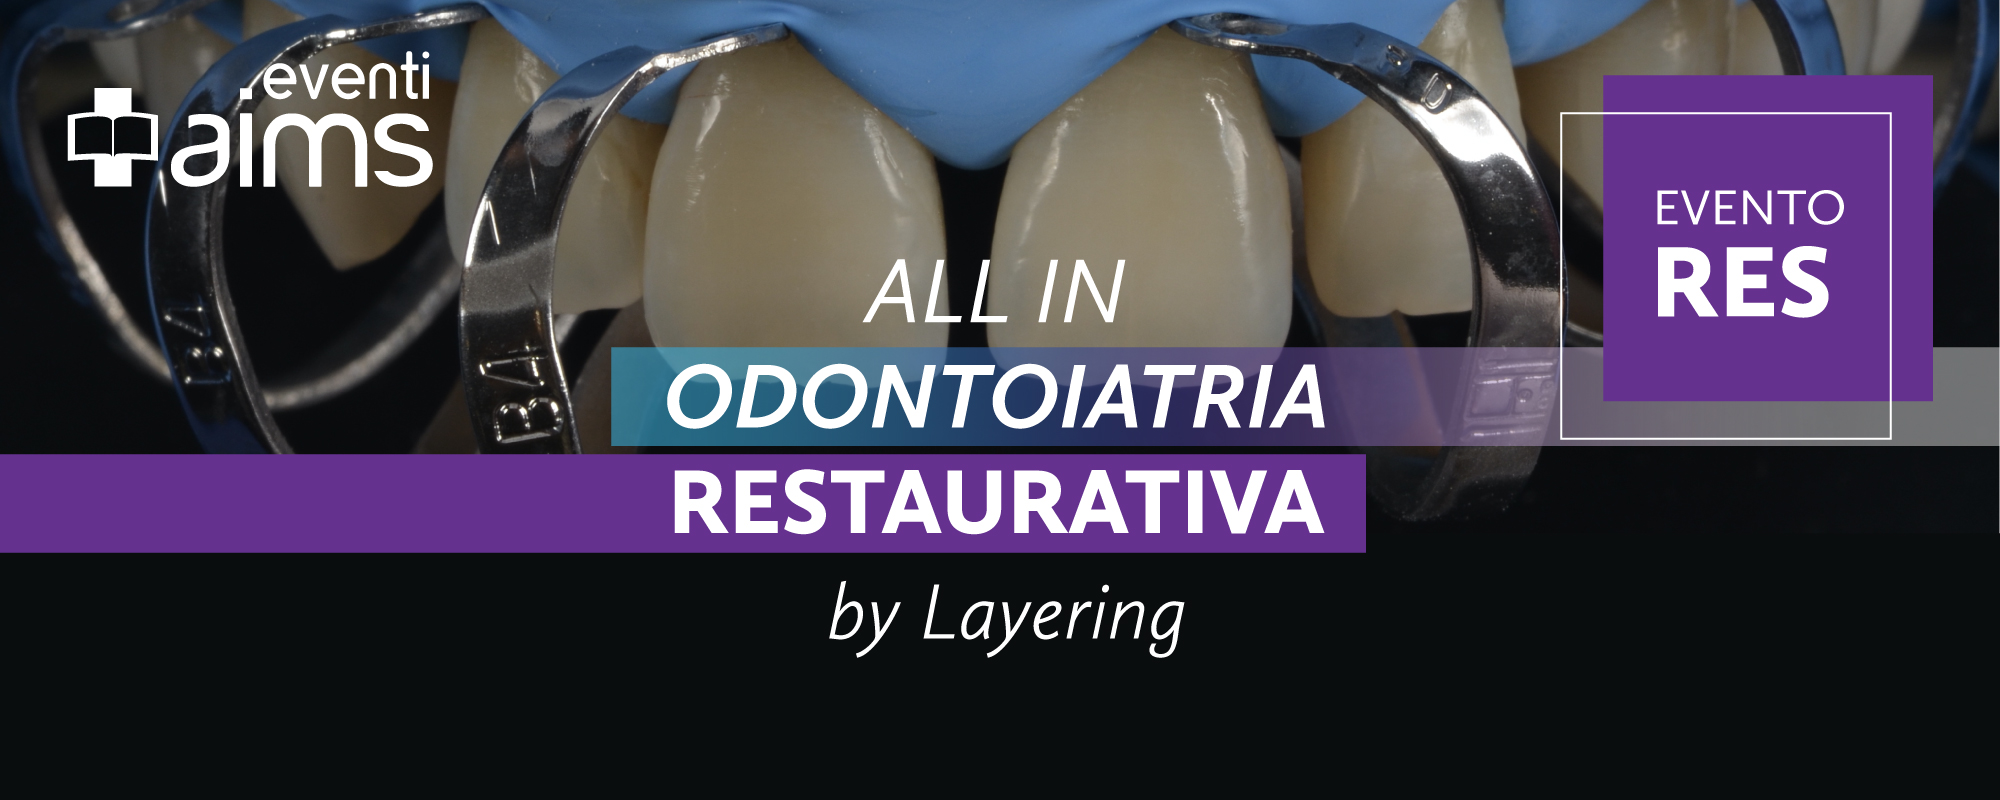 Odontoiatria restaurativa